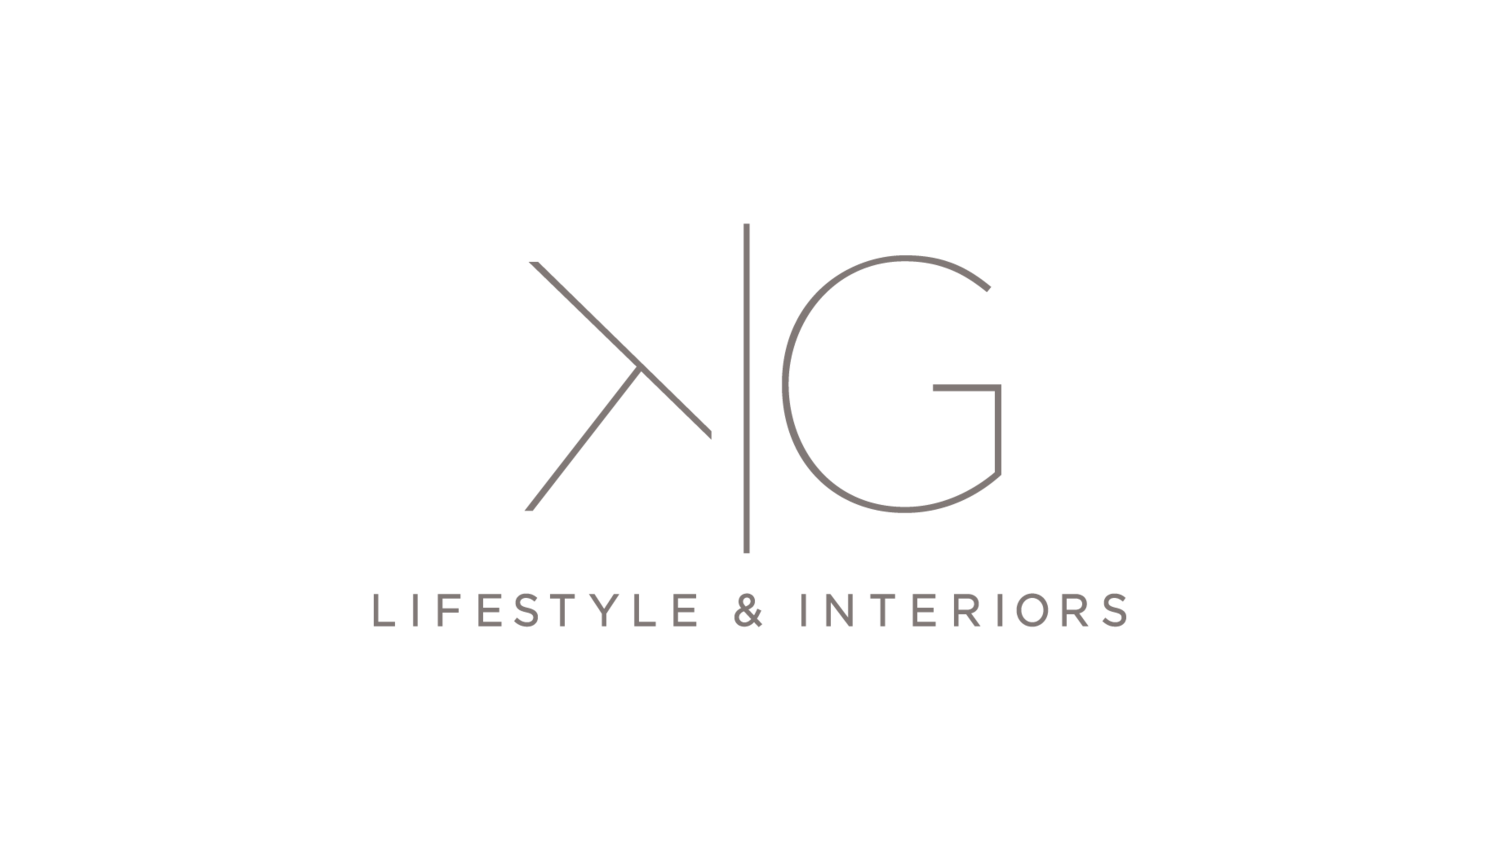 KG Lifestyle & Interiors